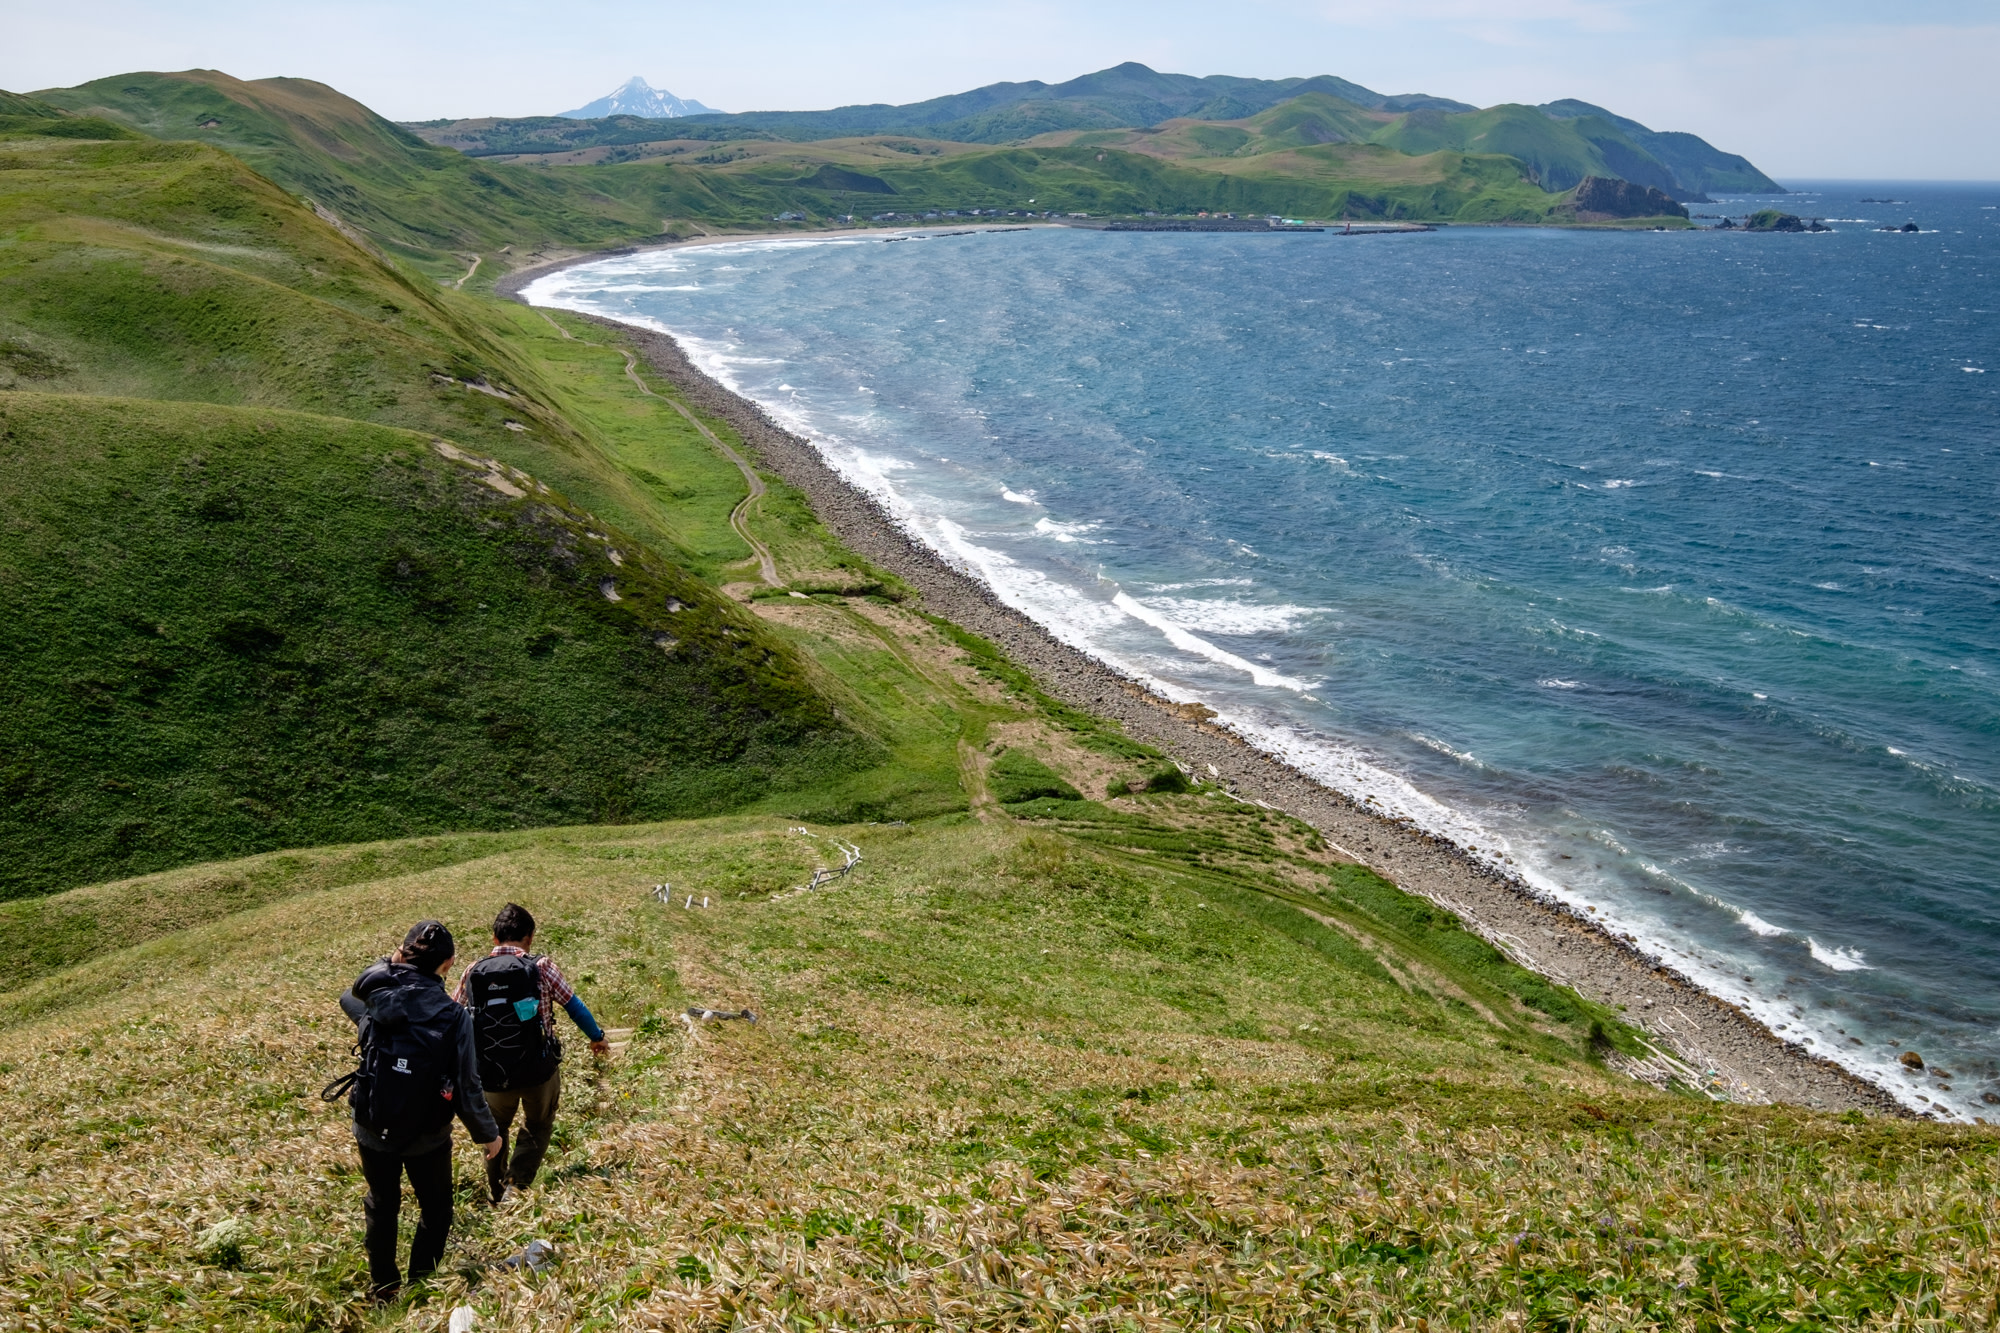 Hikers descending to a beach on Rebun island